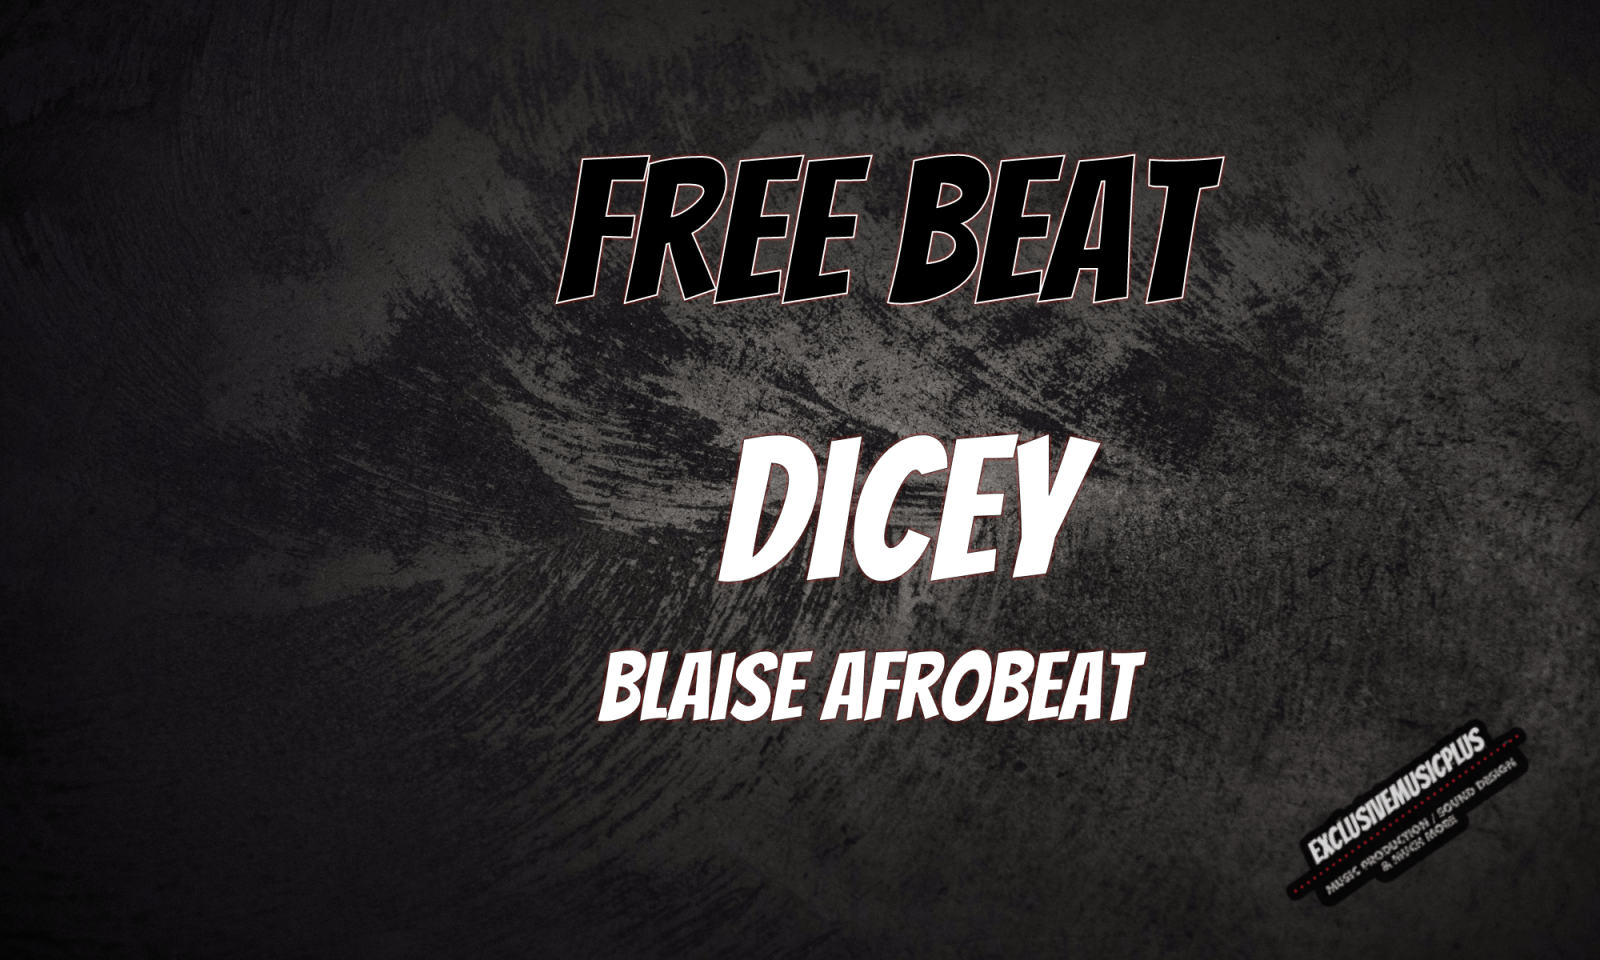 [Free Beat] Dicey – Blaise